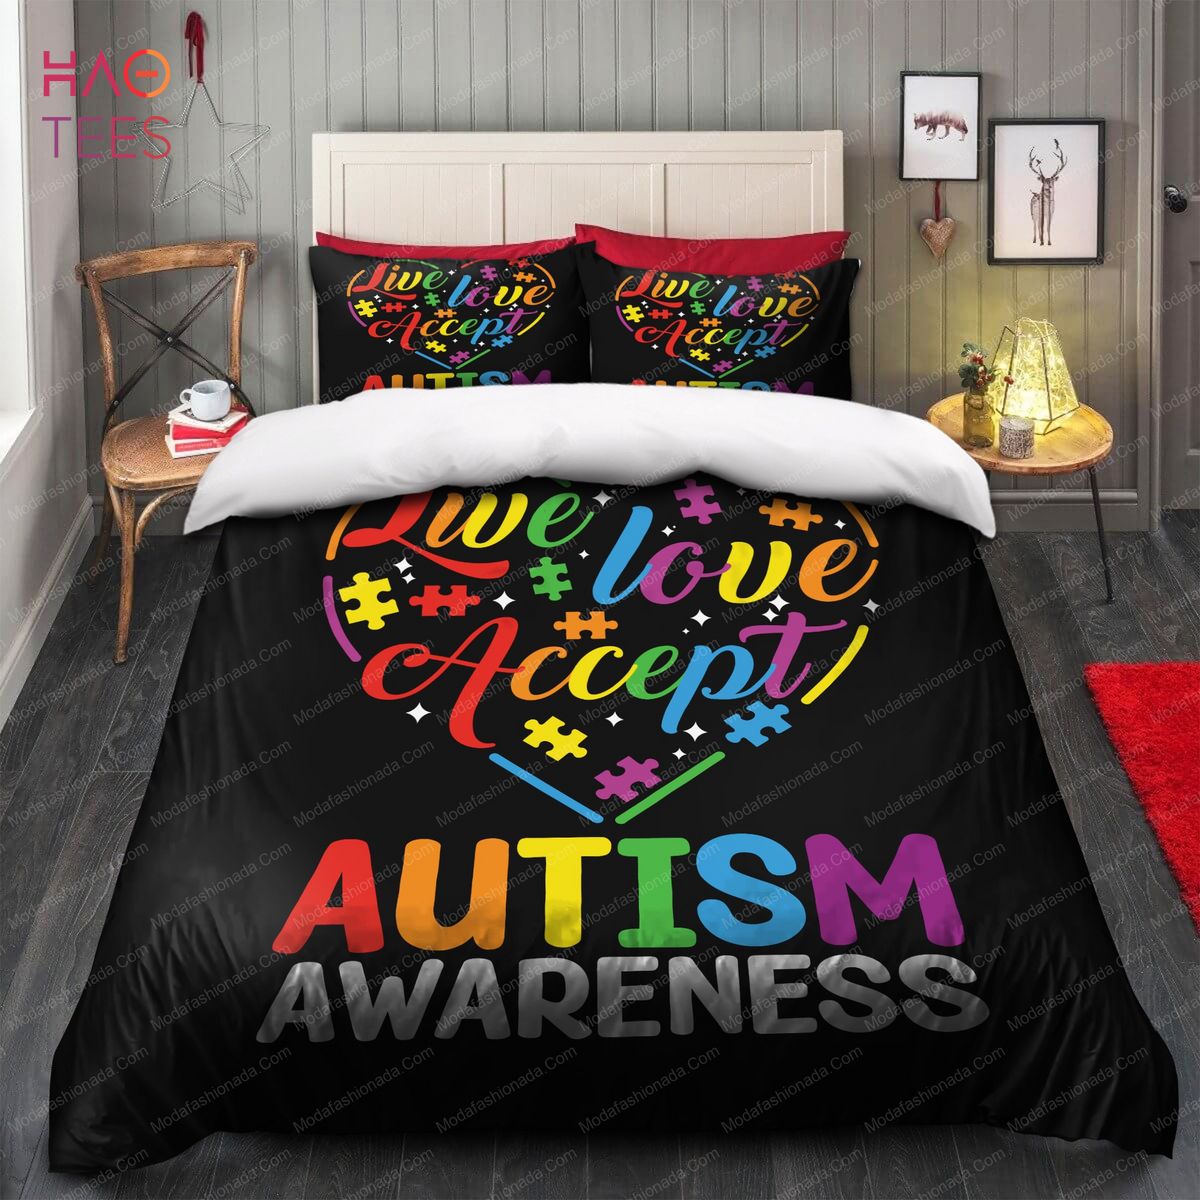 Live Love Accept Autism Awareness Bedding Sets